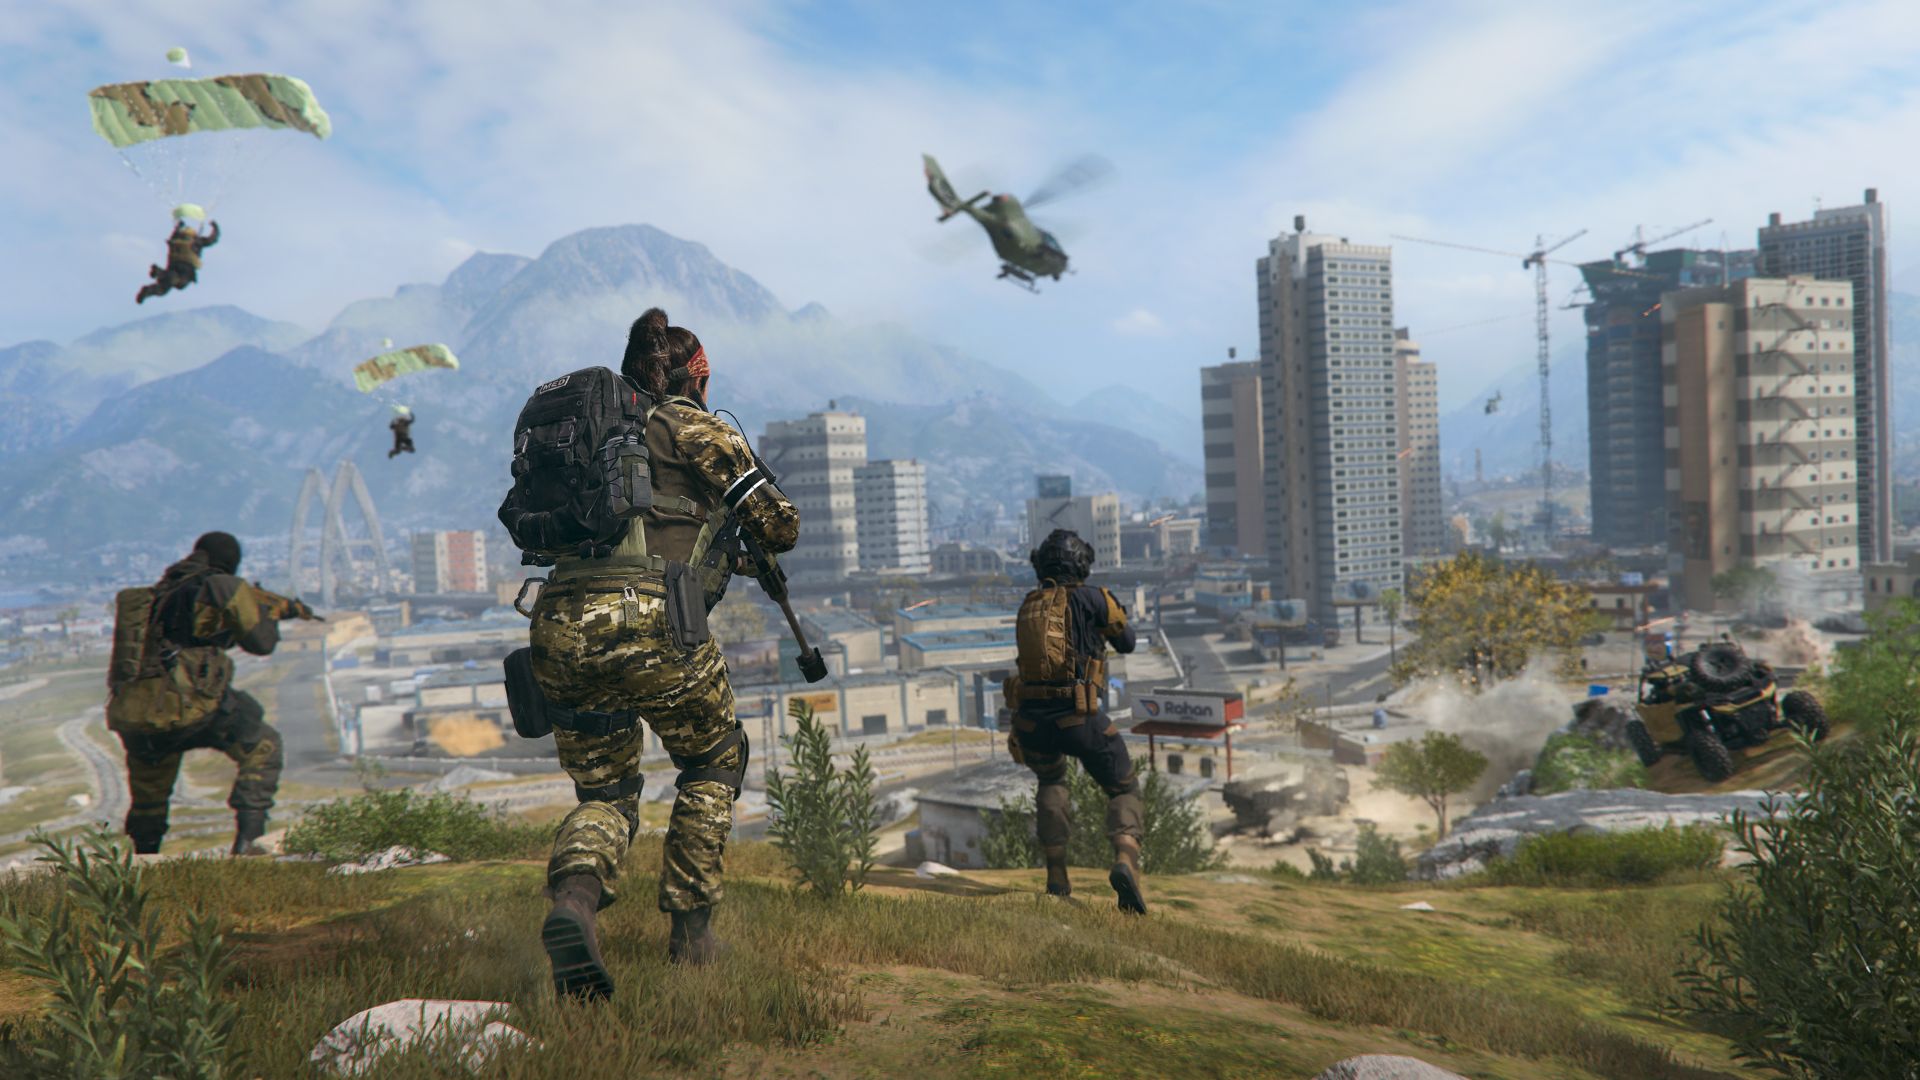 Rust confirmed for Call Of Duty: Modern Warfare 3 beta